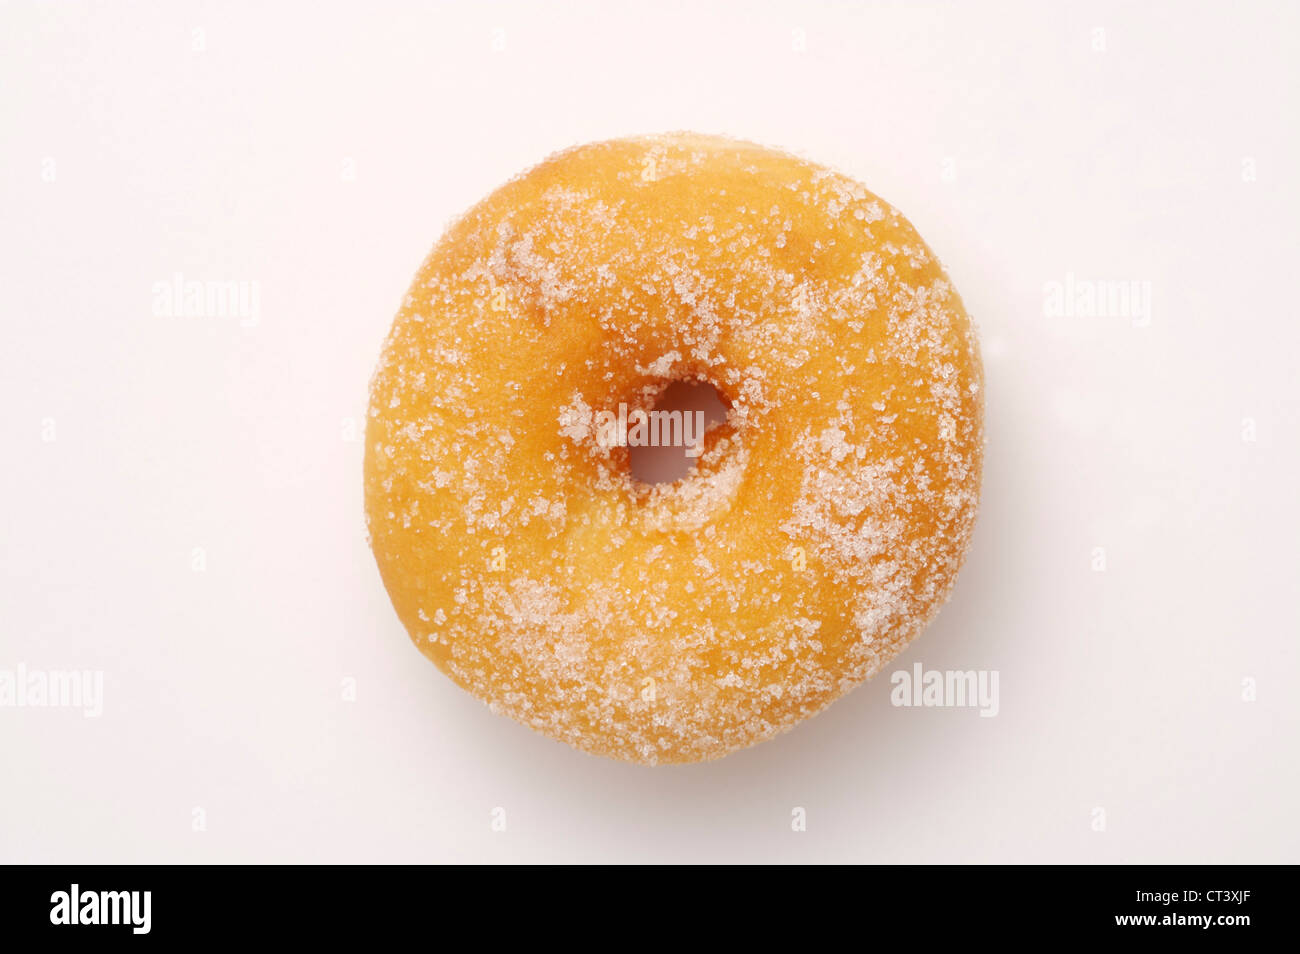 Donut Stock Photo